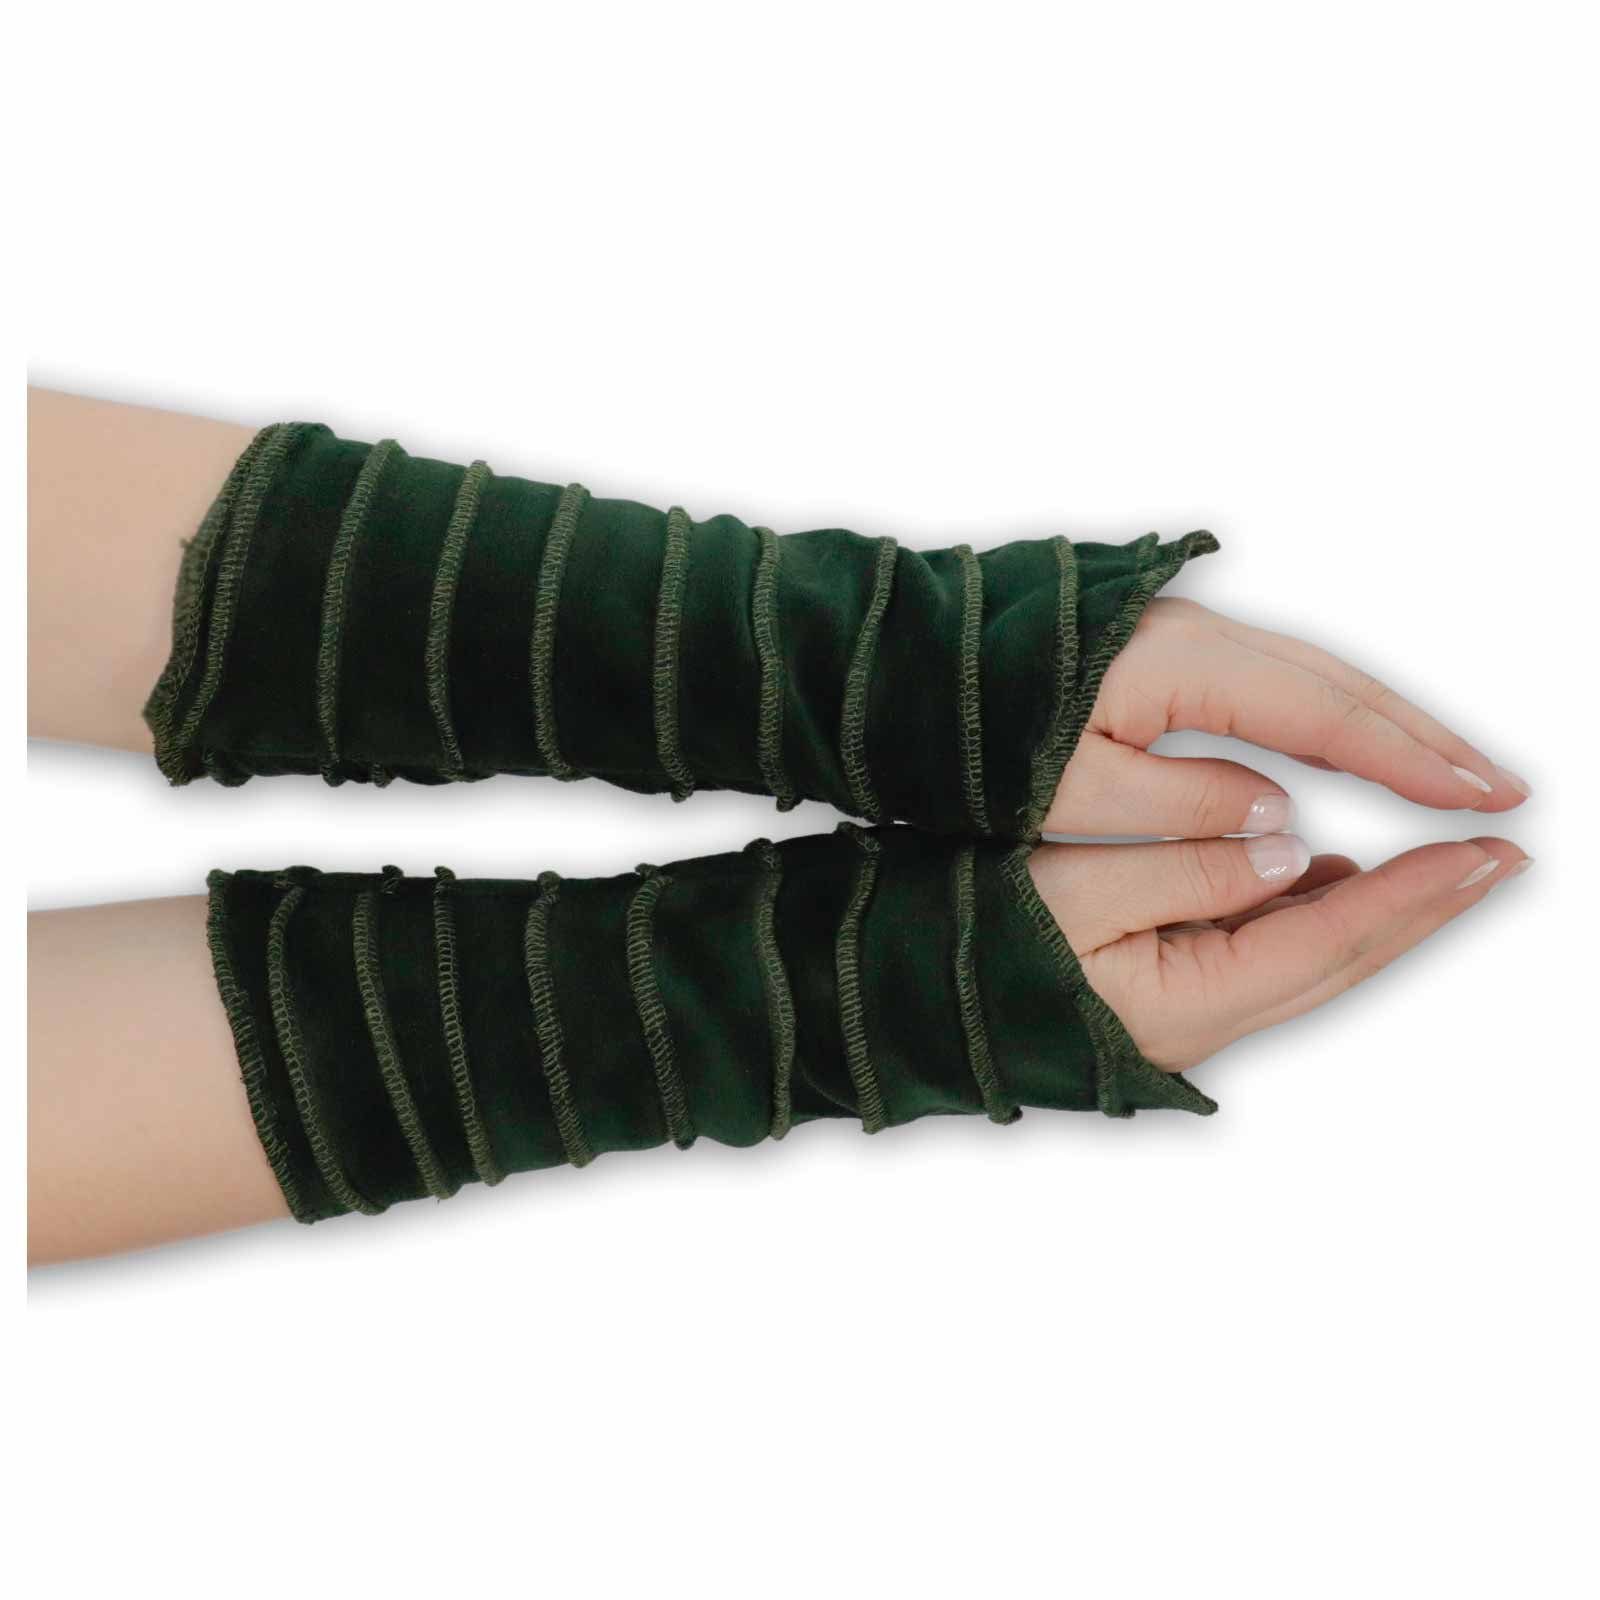 Handschuhe Stulpen KUNST Armstulpen Handwärmer MAGIE Magie Armstulpen Samt und UND Kunst Grün